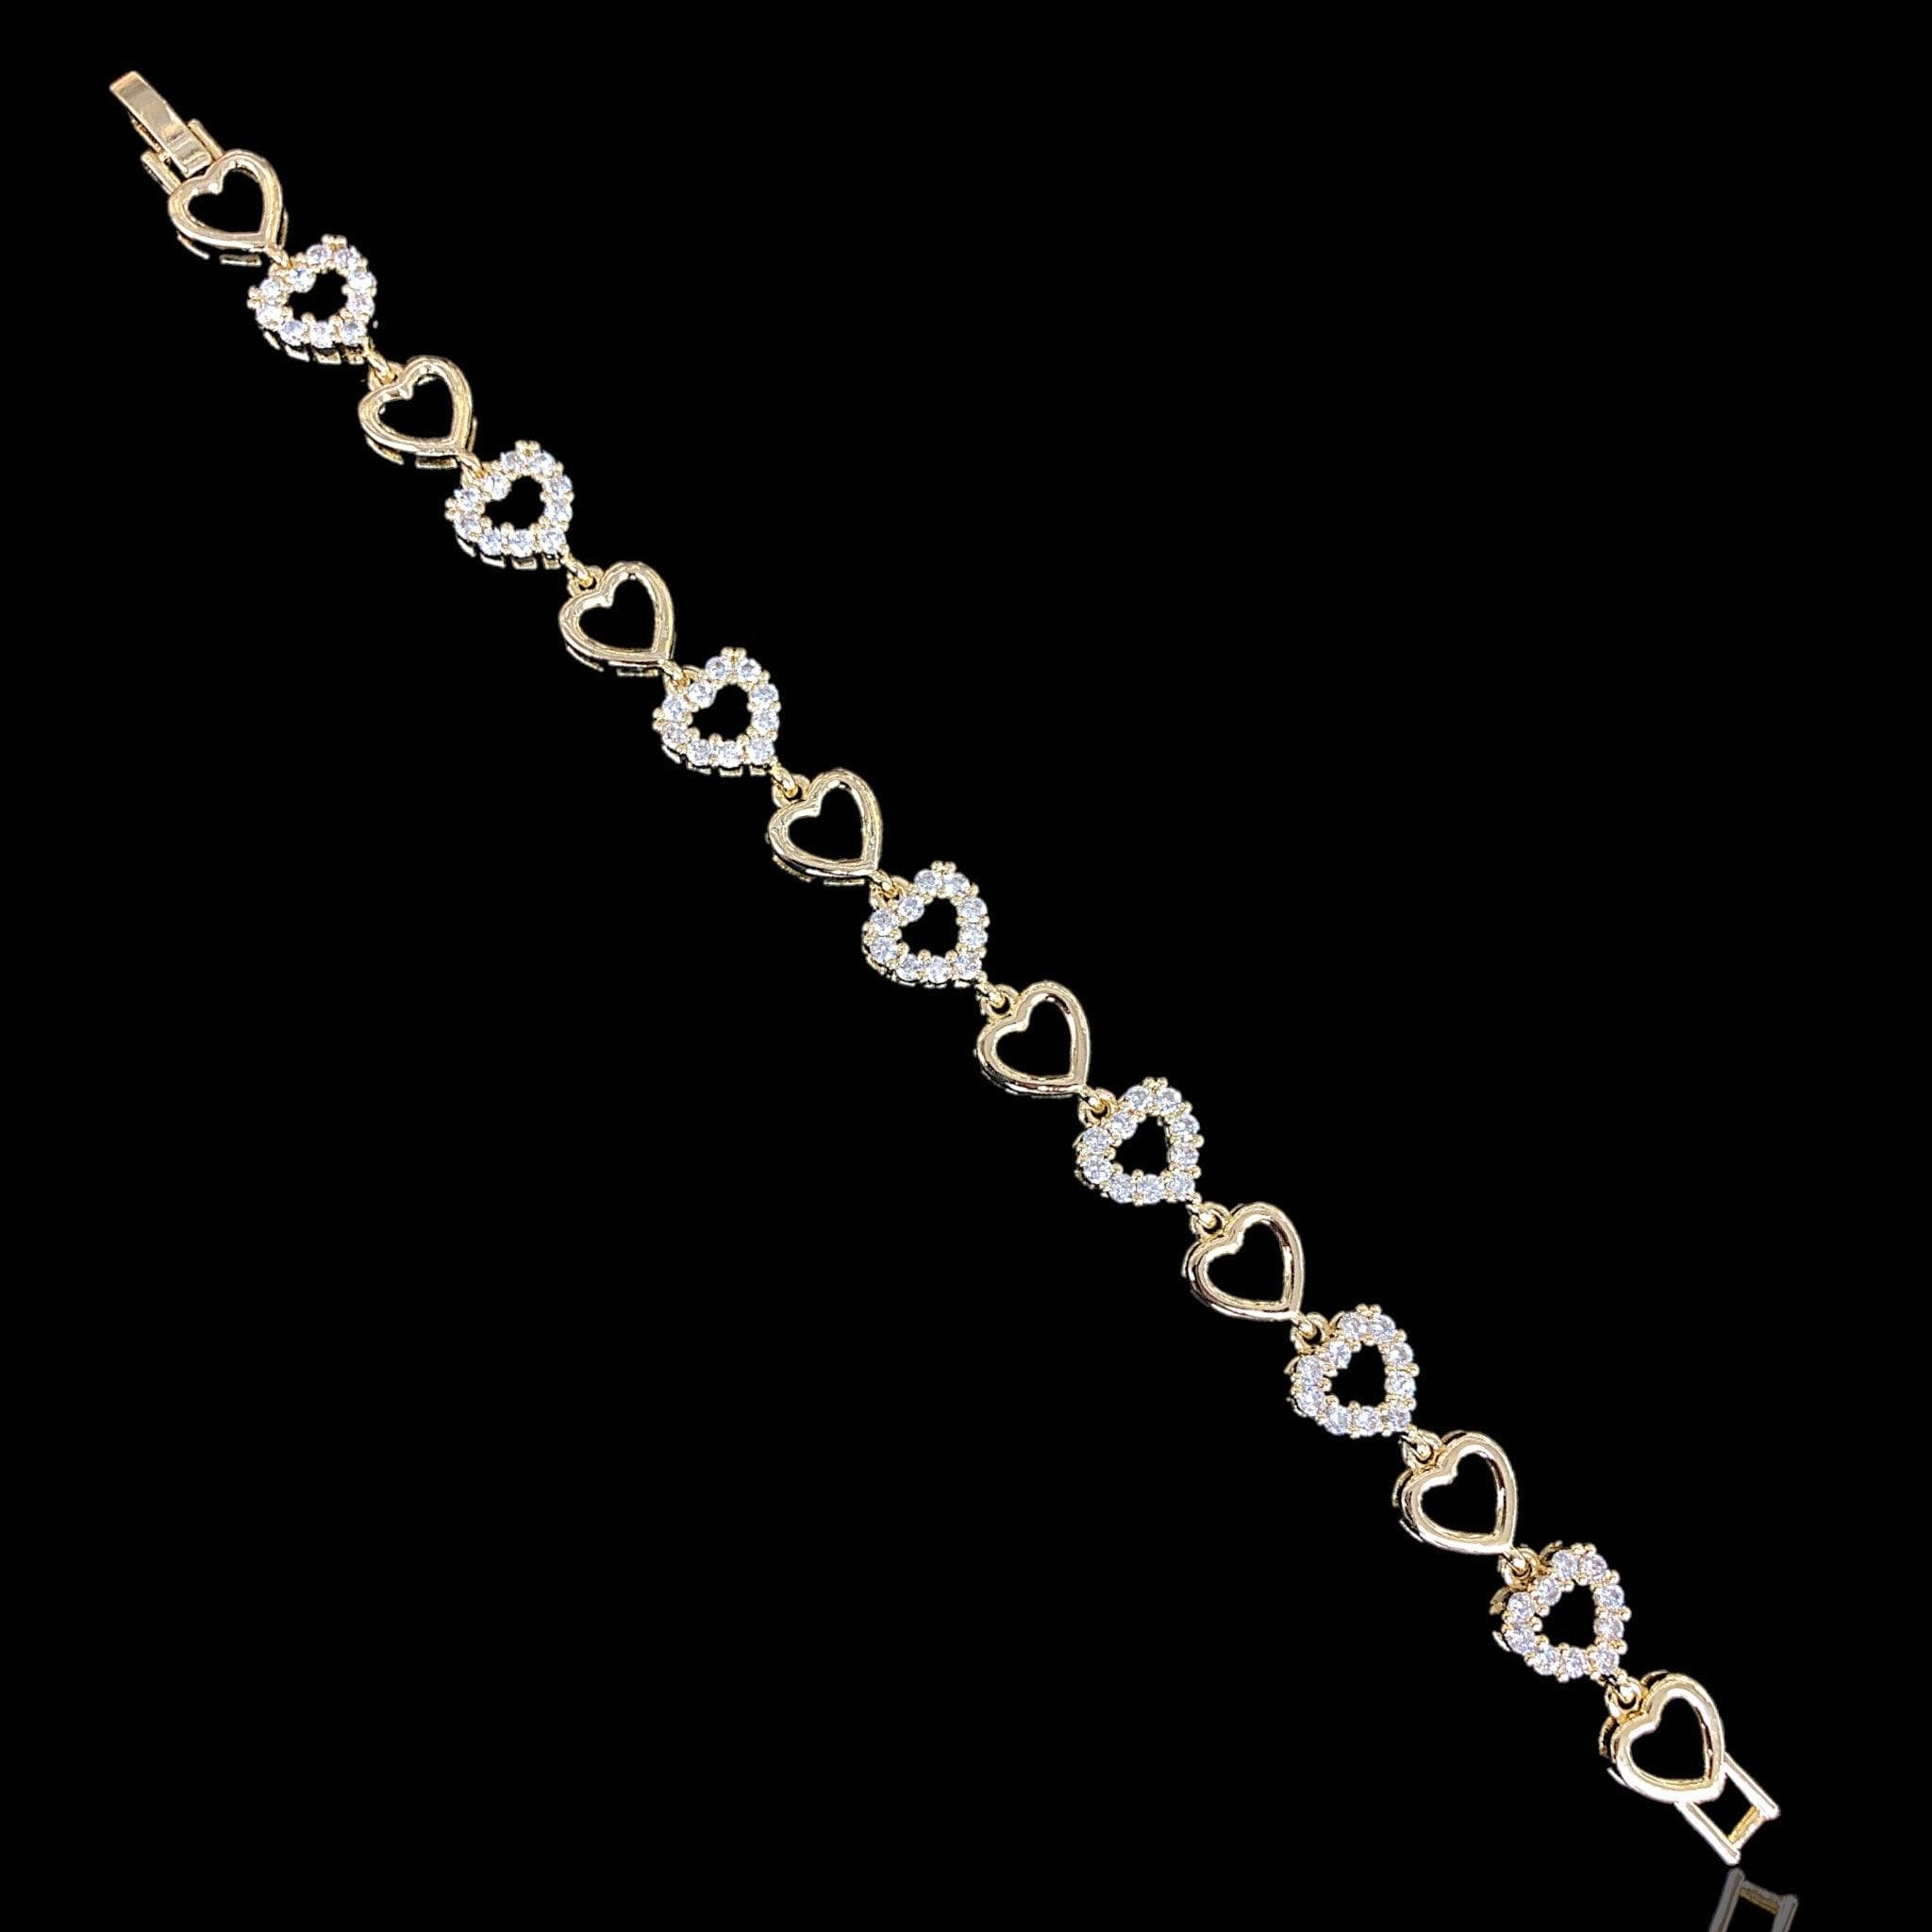 18k Gold-Filled CZ Eternal Heart Bracelet- kuania oro laminado